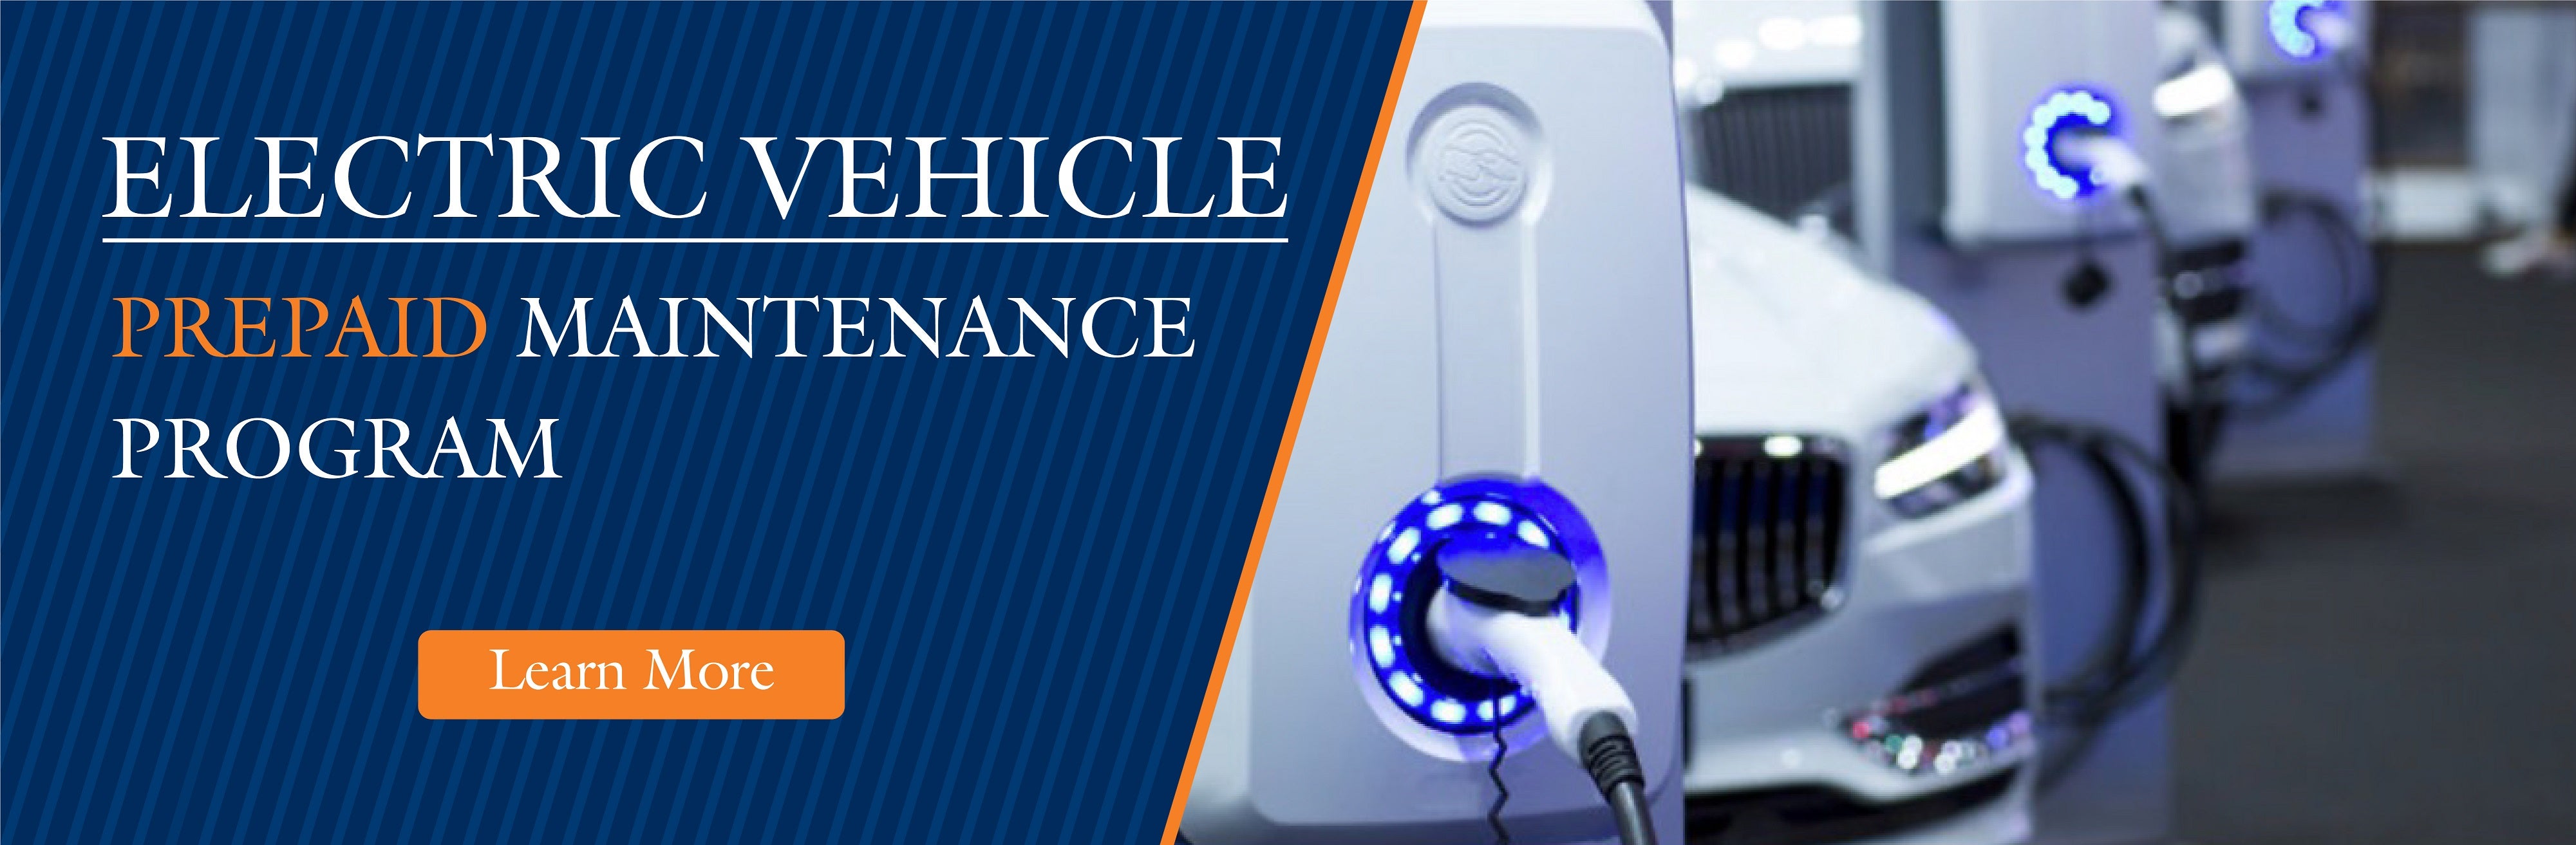 EV electric vehicles prepaid maintenance program